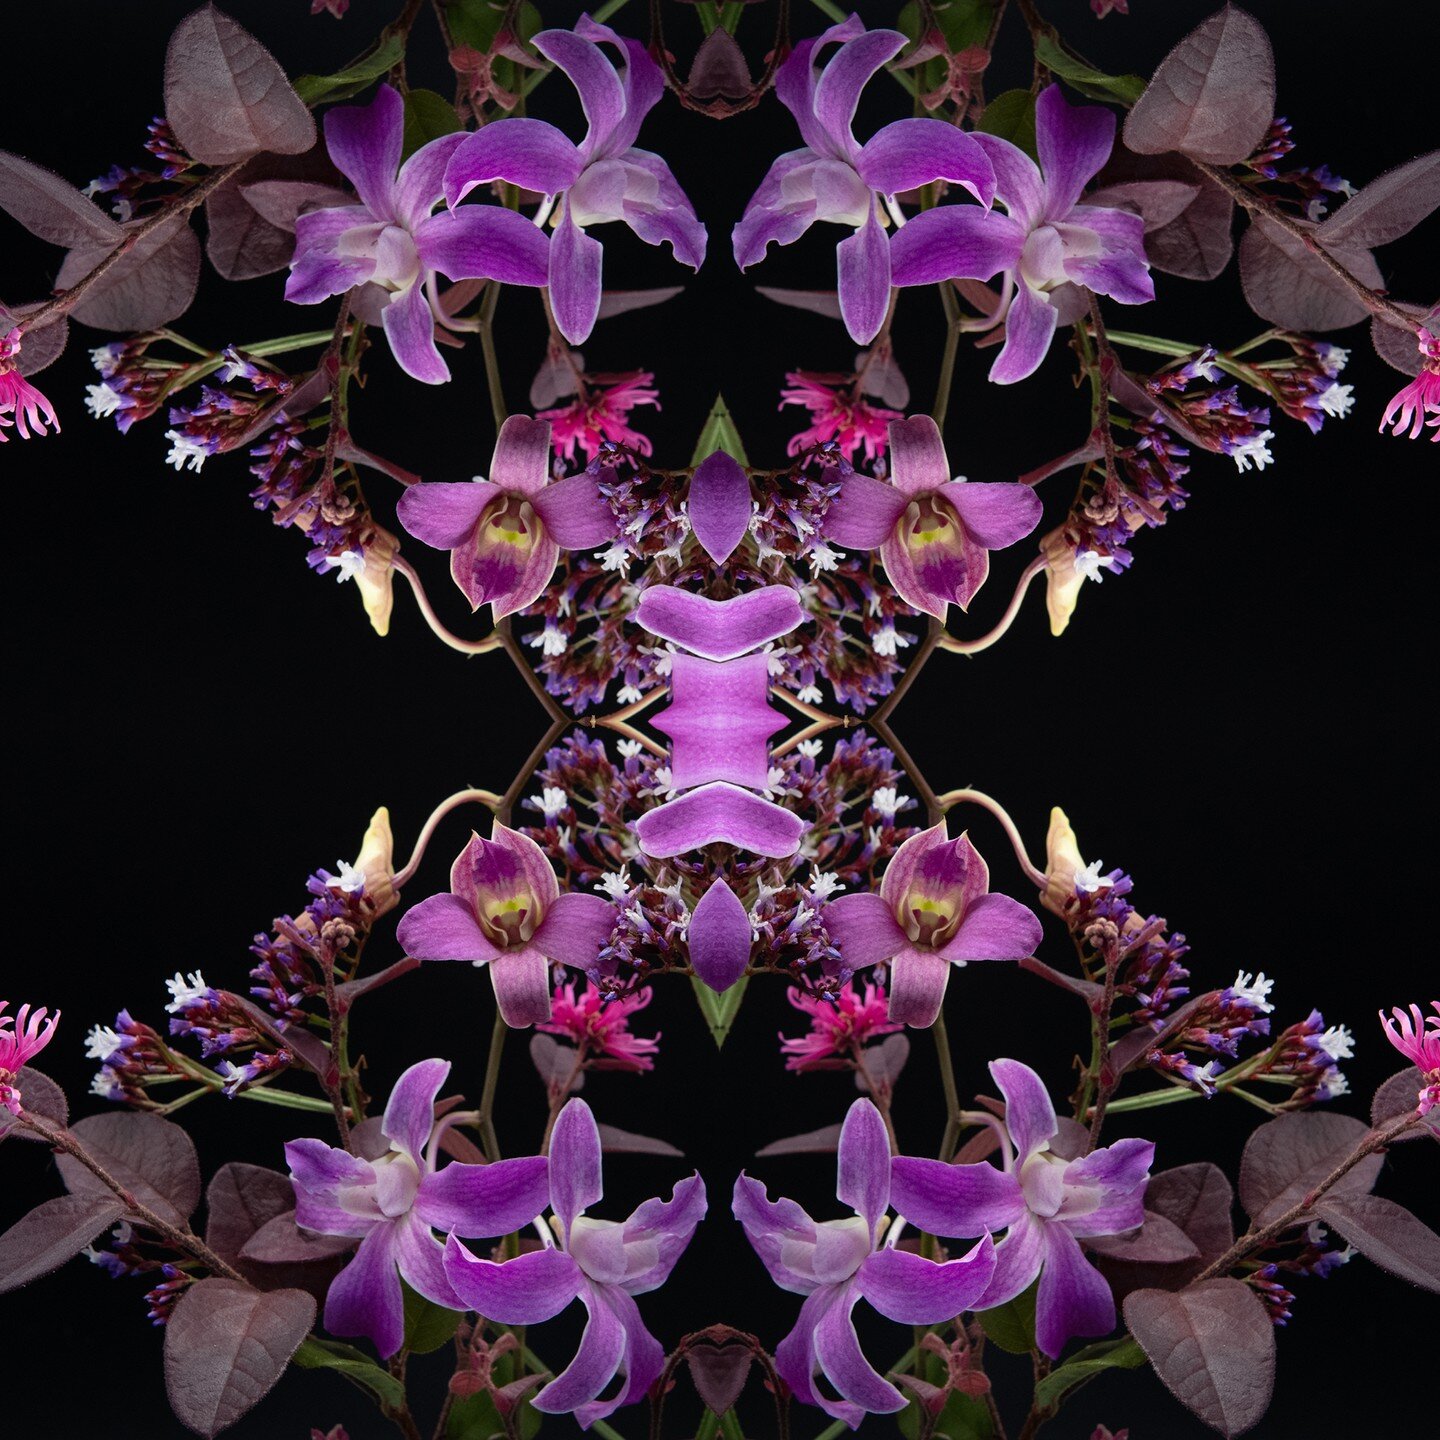 Cruising orchidly along. #australianartist #photographicart #brisbaneartist #theshapesofpossibility #harmonicgeometry #harmony #art #natureart #otherdimensions #possiblities #connection #shiftingrealities #paralleluniverse #meditationart #perspective